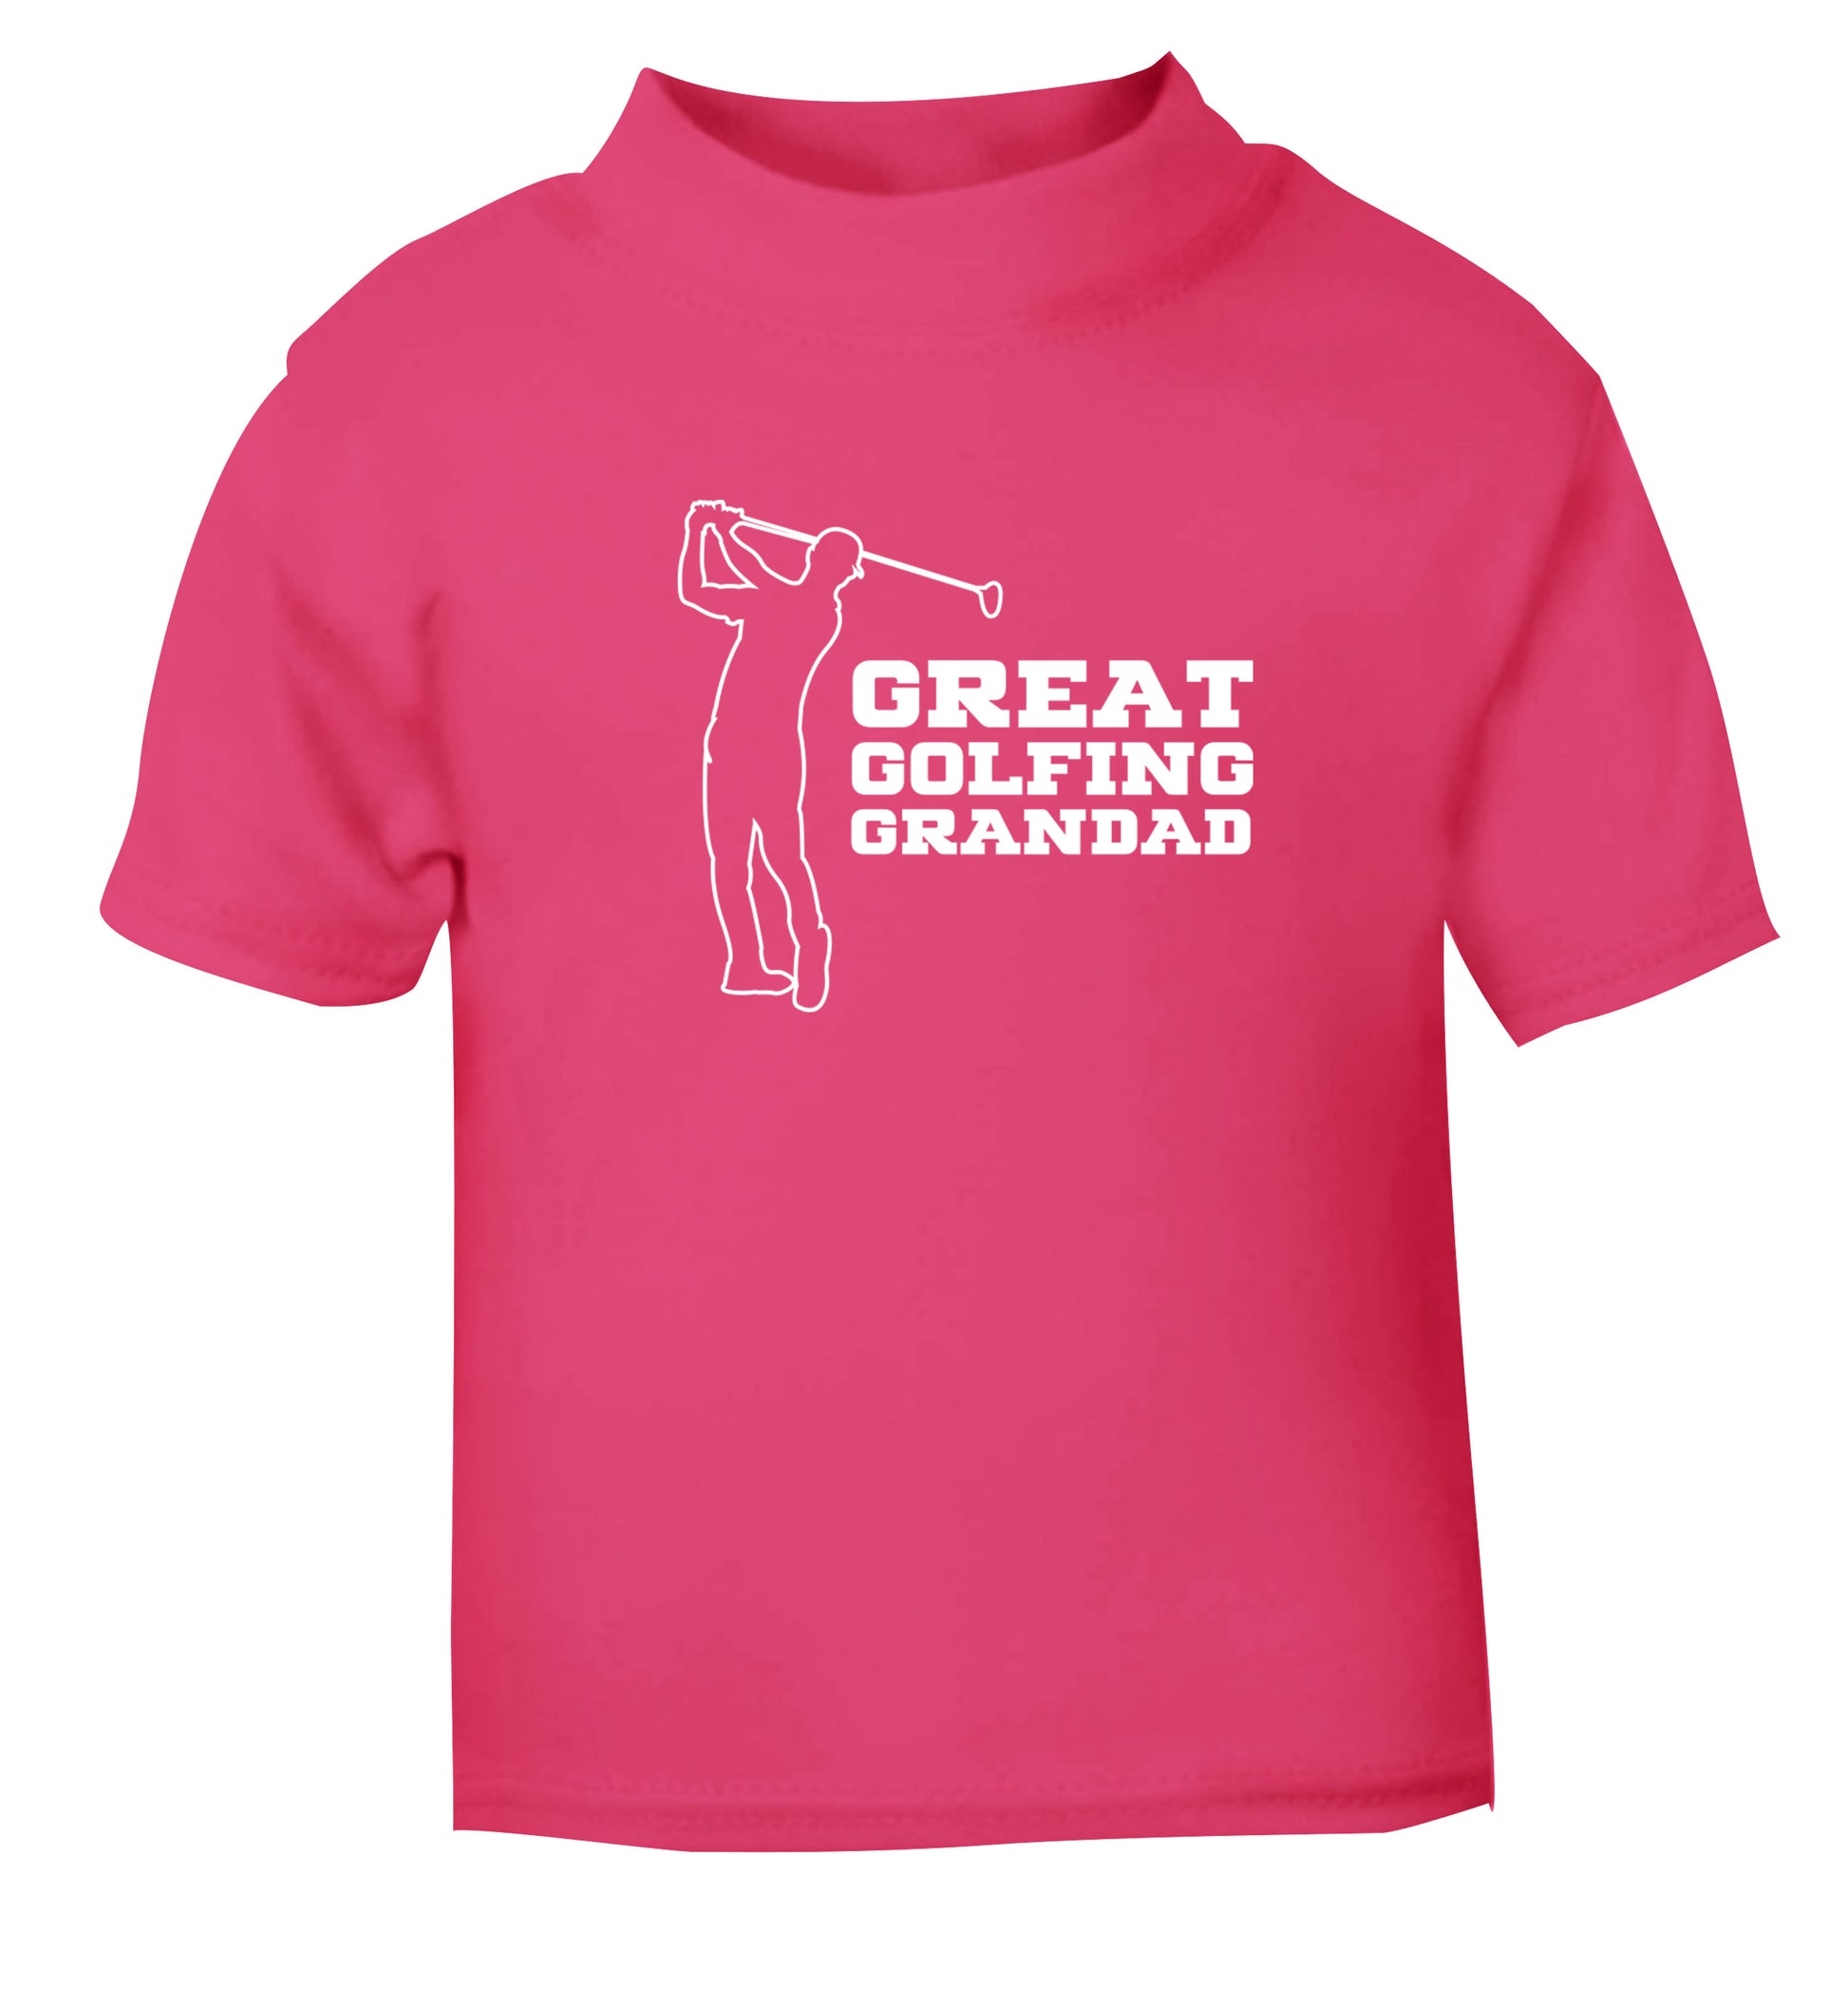 Great Golfing Grandad pink Baby Toddler Tshirt 2 Years